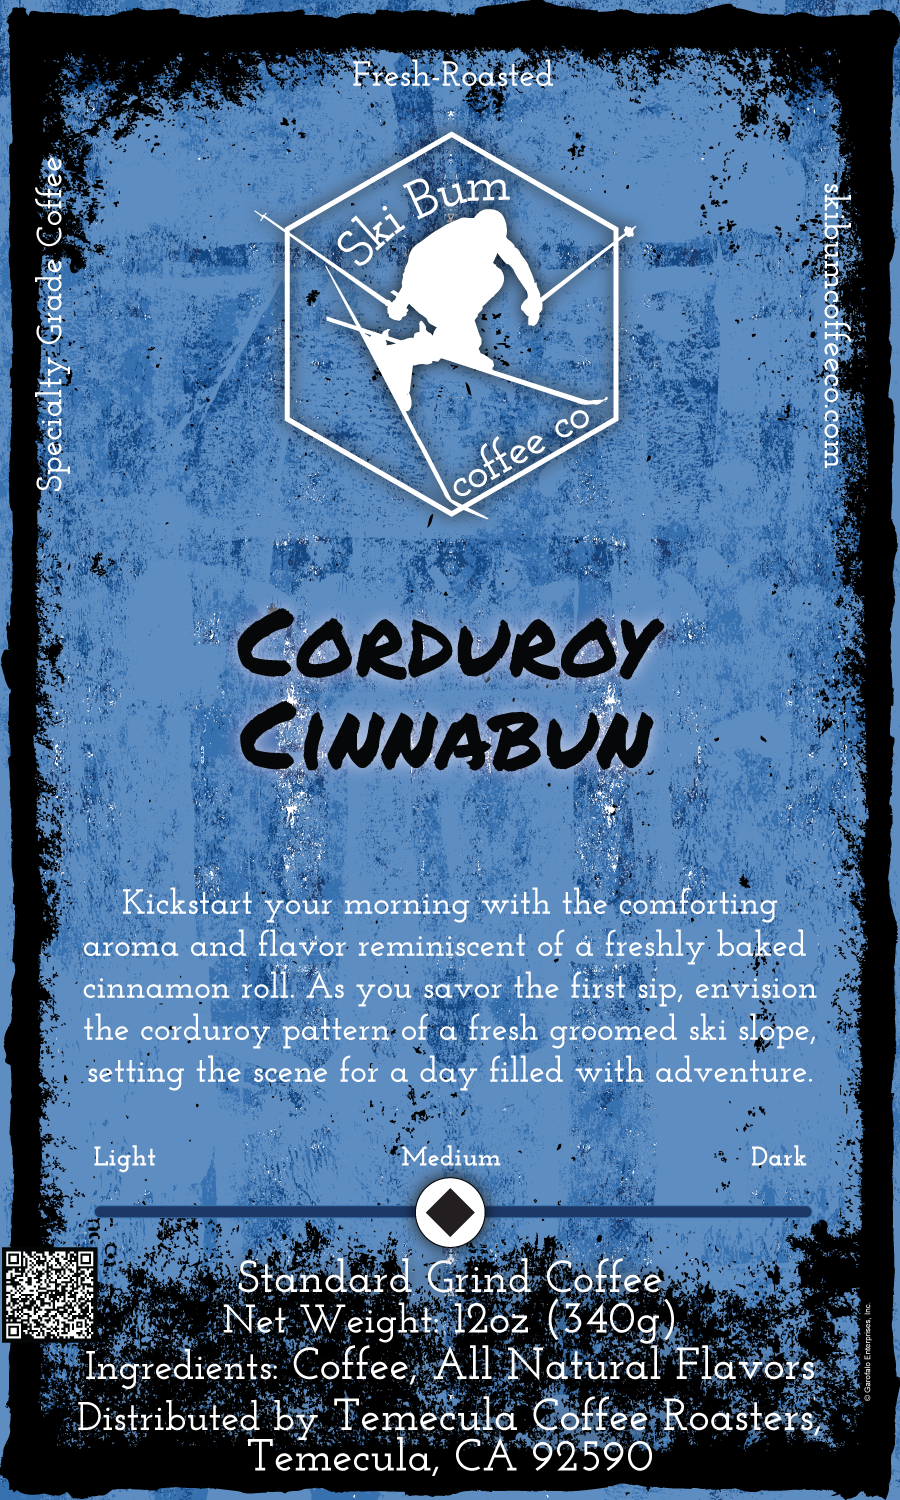 Corduroy Cinnabun